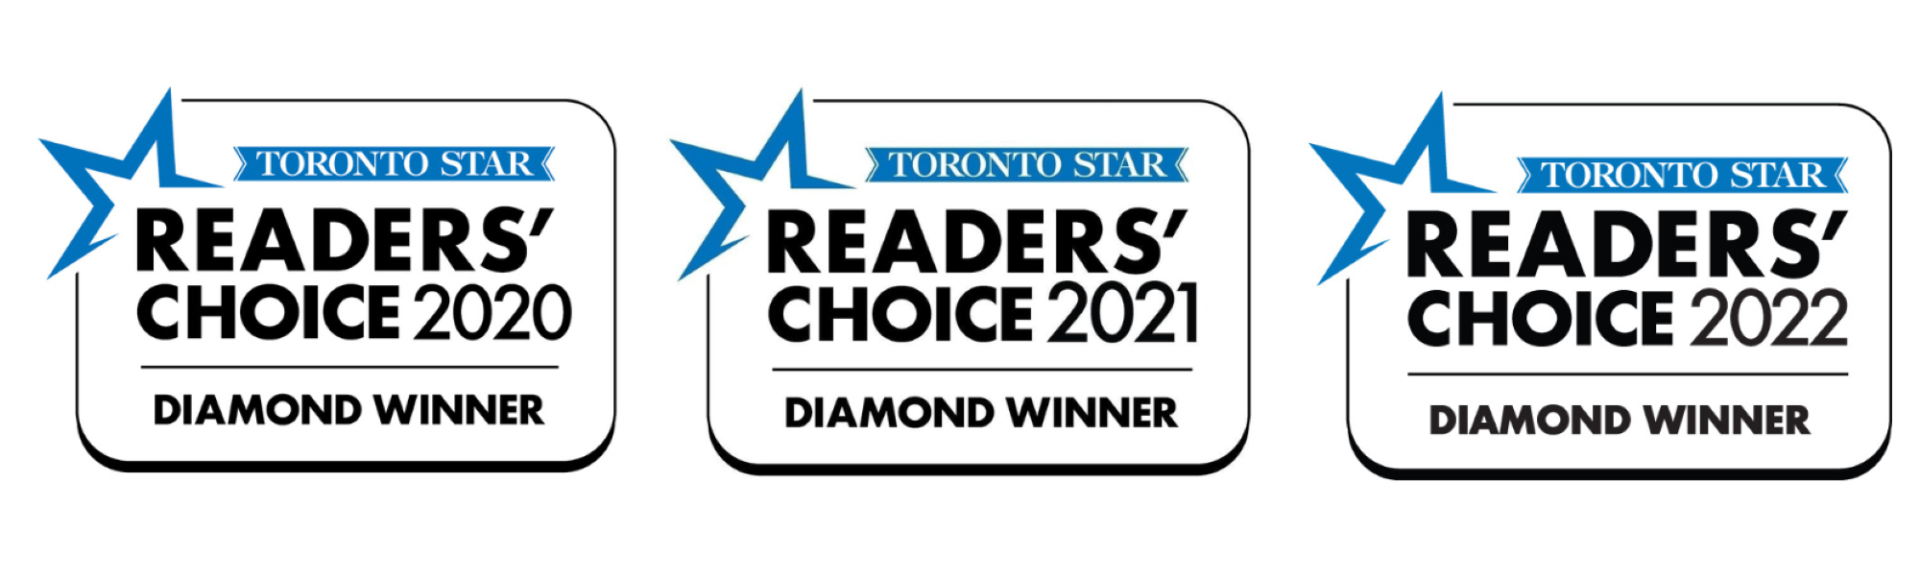 readers choice 3 years 2022 1